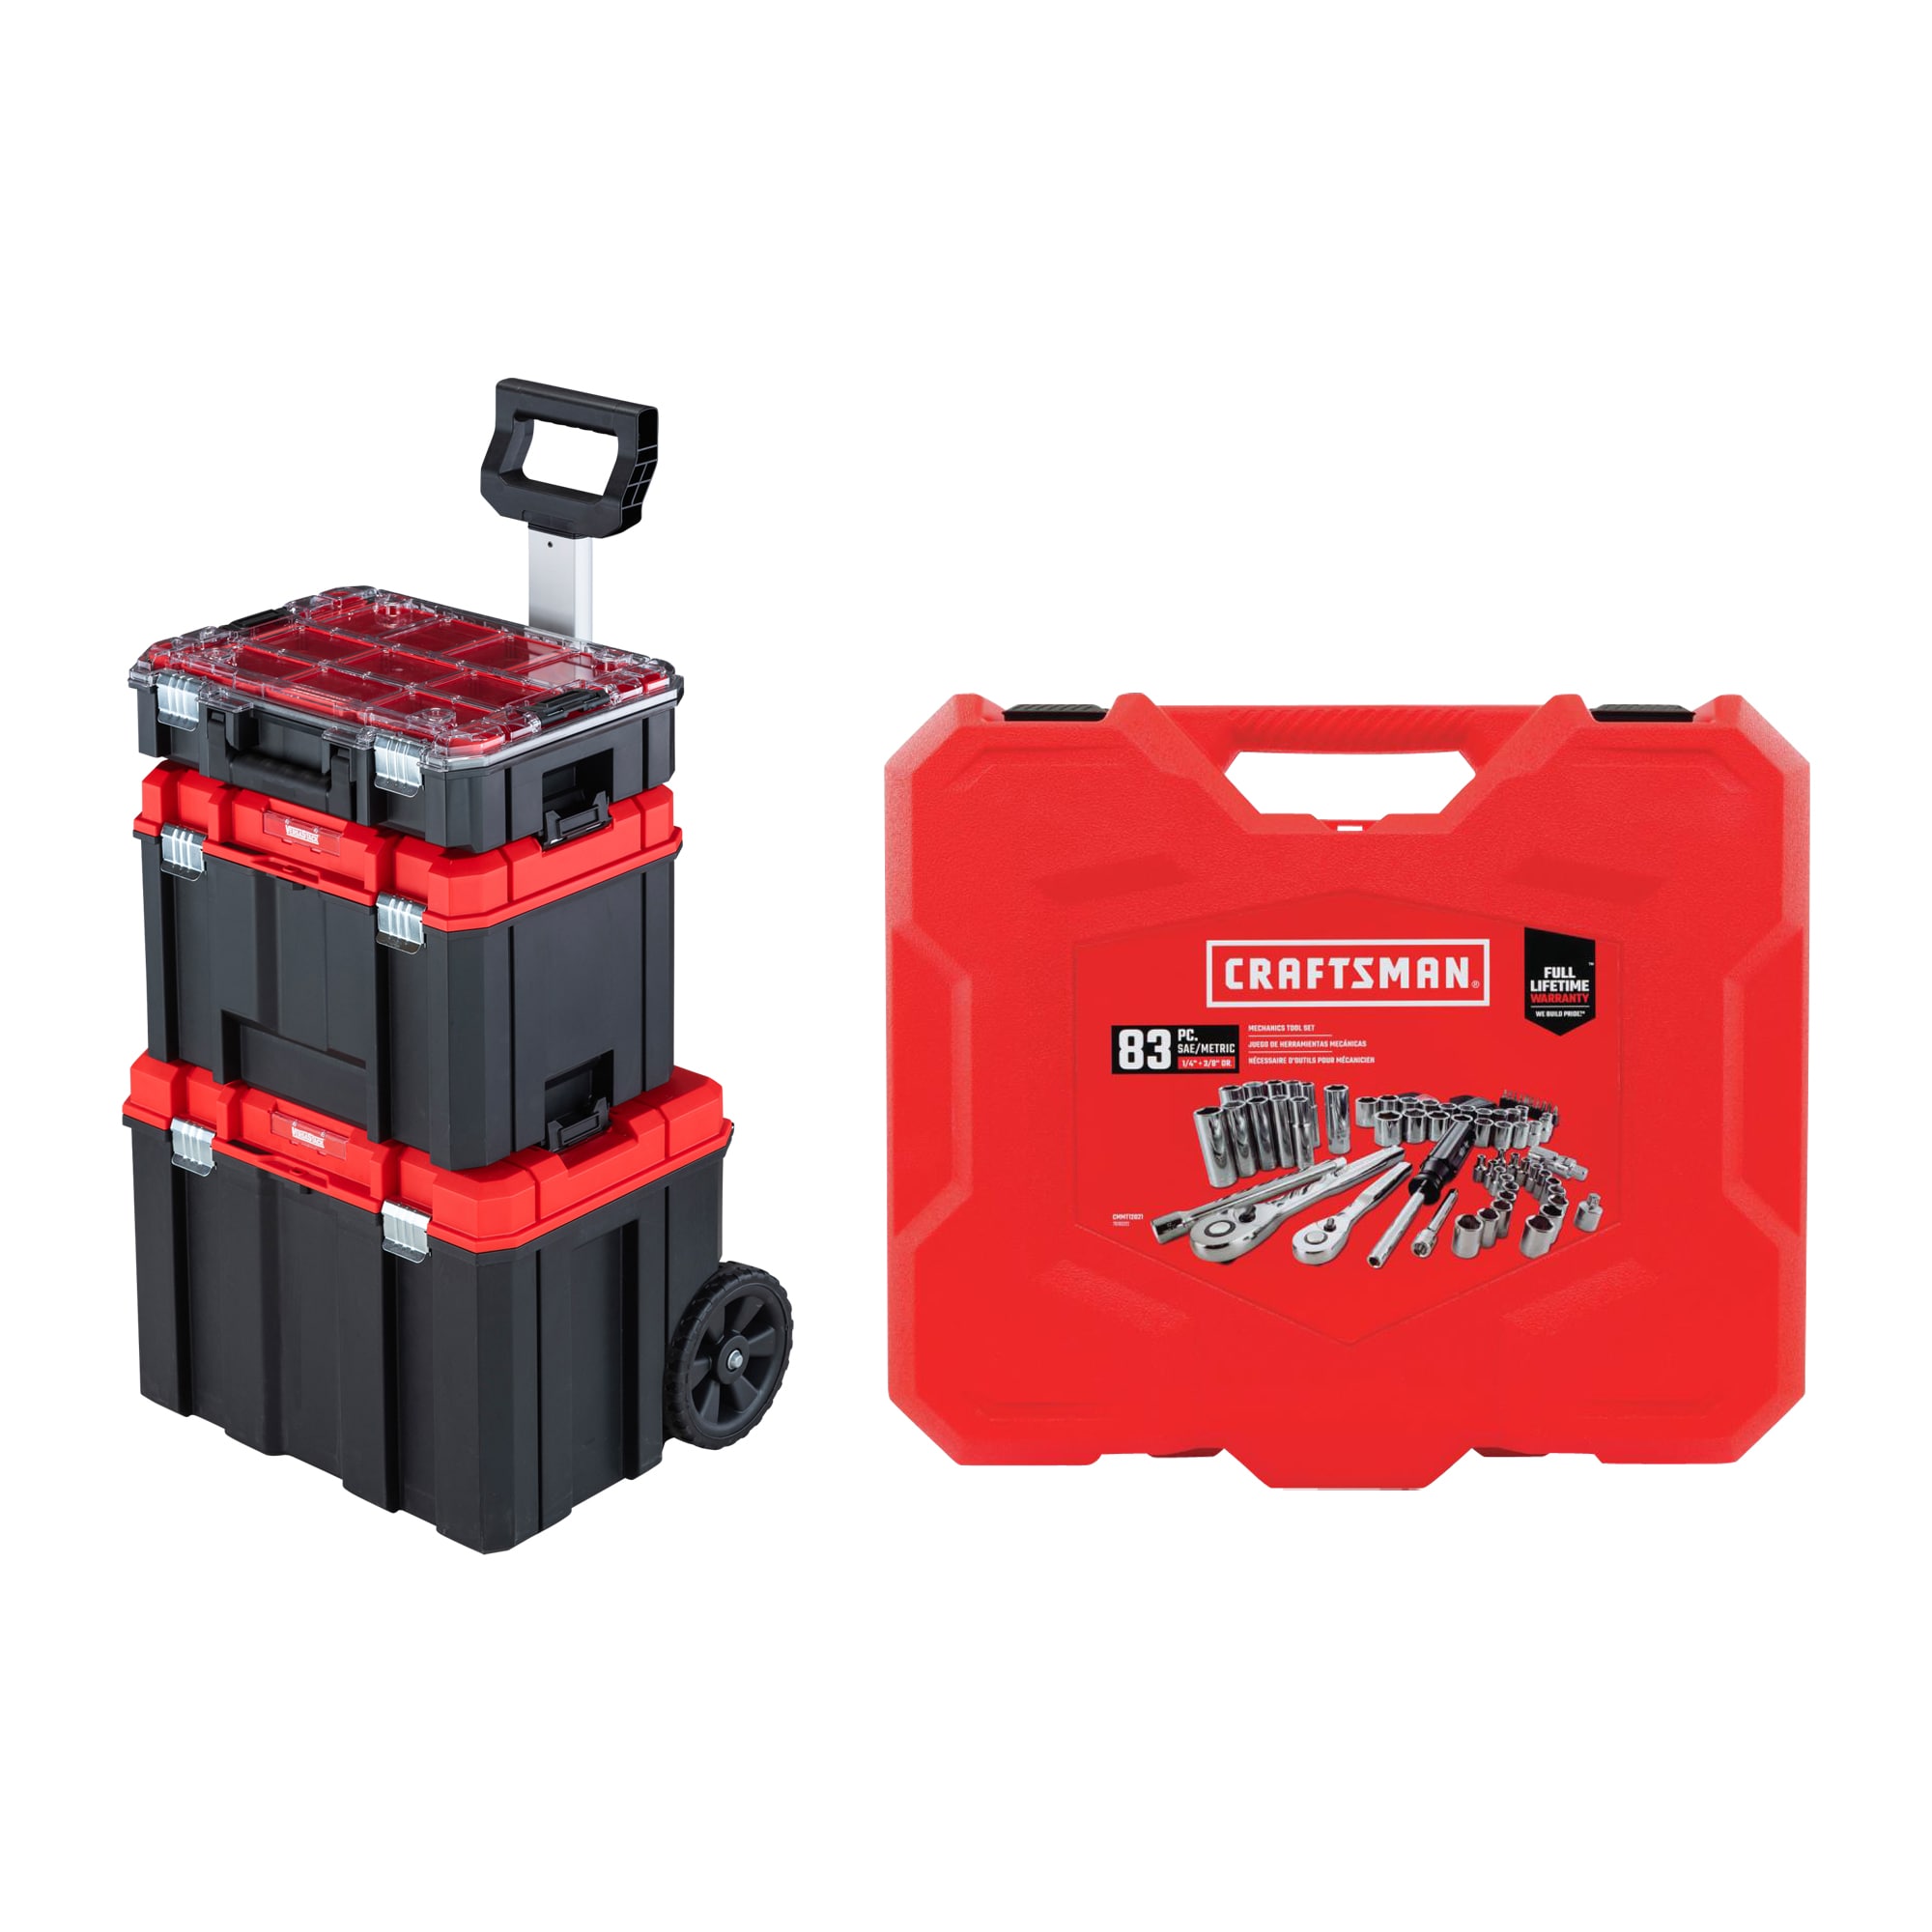 Standard (SAE) Portable Tool Boxes at